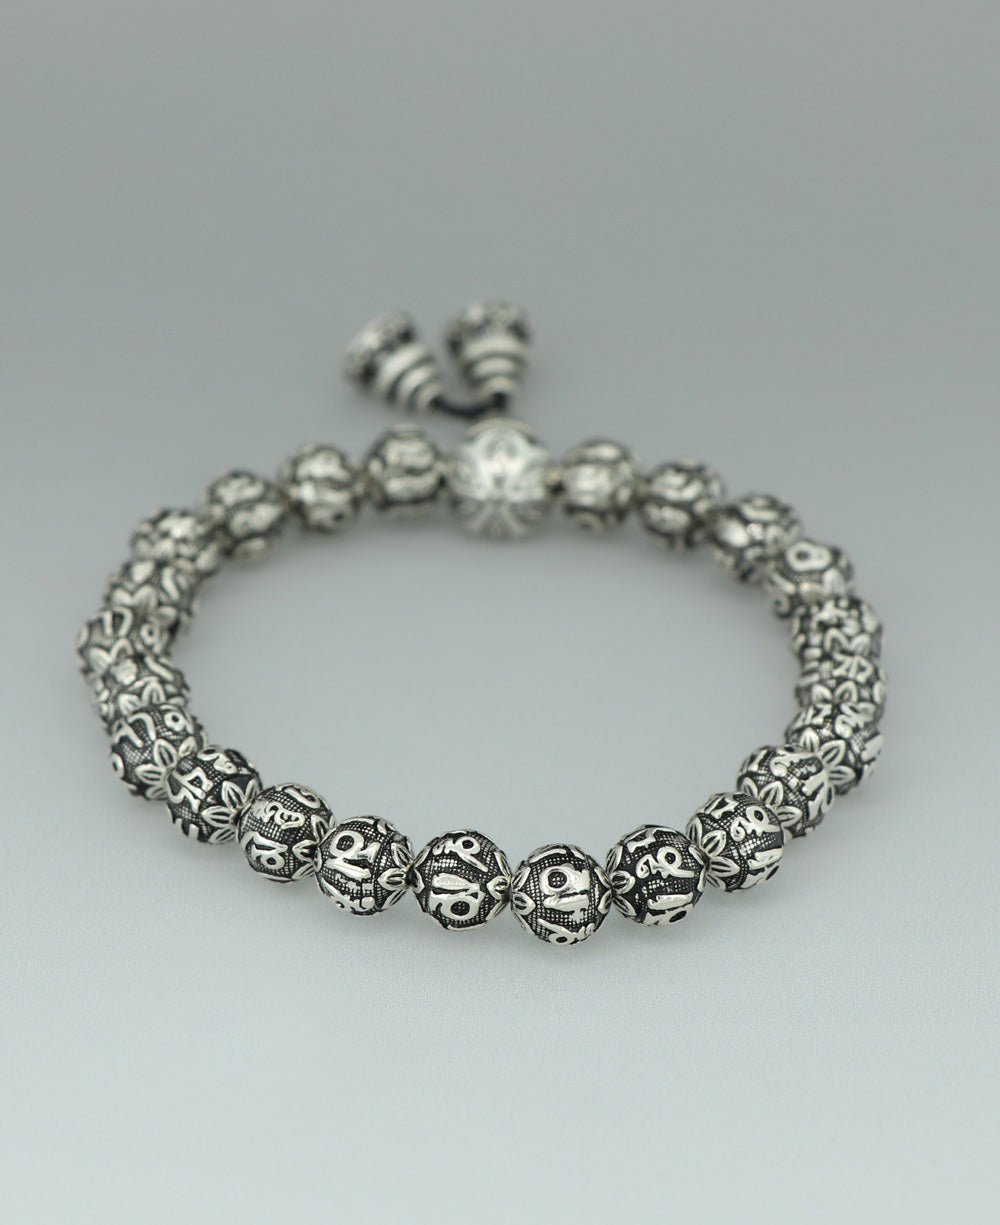 Premium Sterling Silver Om Mani Padme Hum Mantra Beads Women's Stretch Bracelet - Bracelets